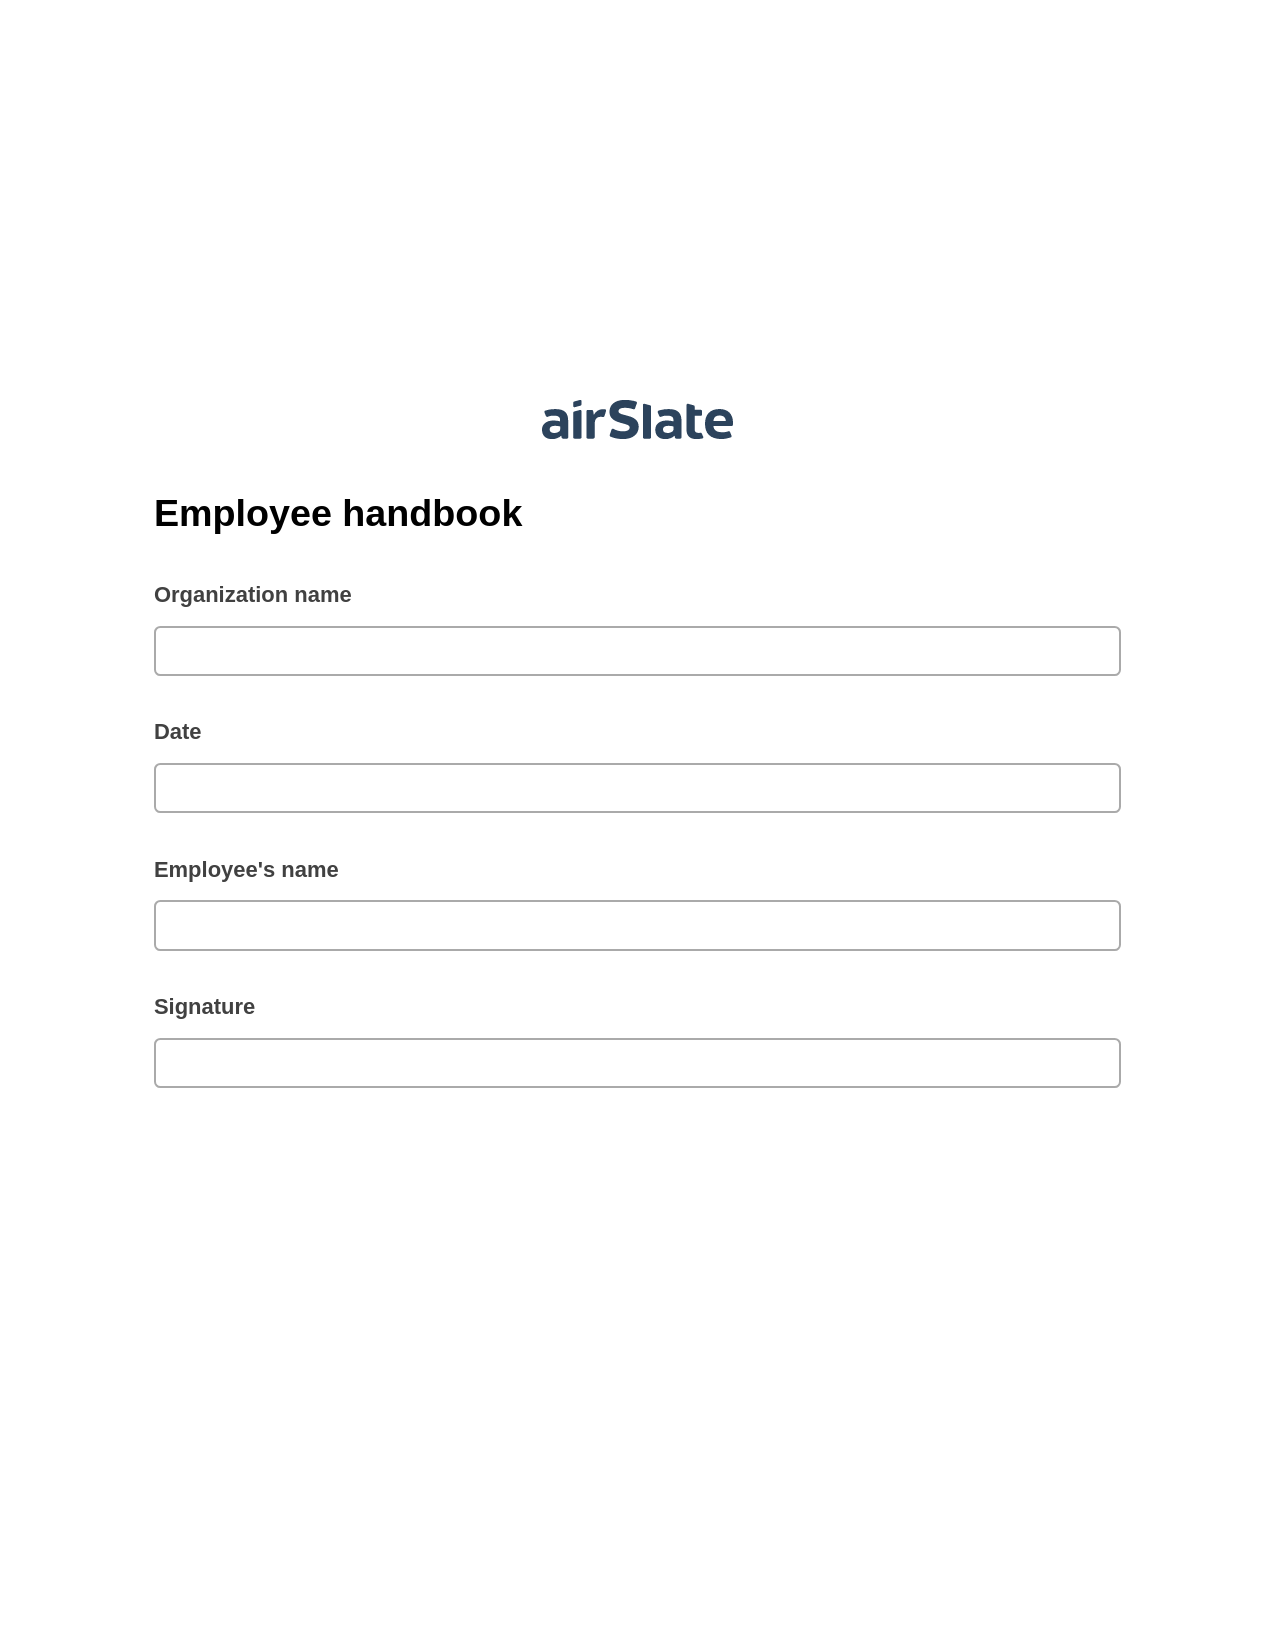 Multirole Employee handbook Pre-fill Document Bot, Add Tags to Slate Bot, Export to Google Sheet Bot